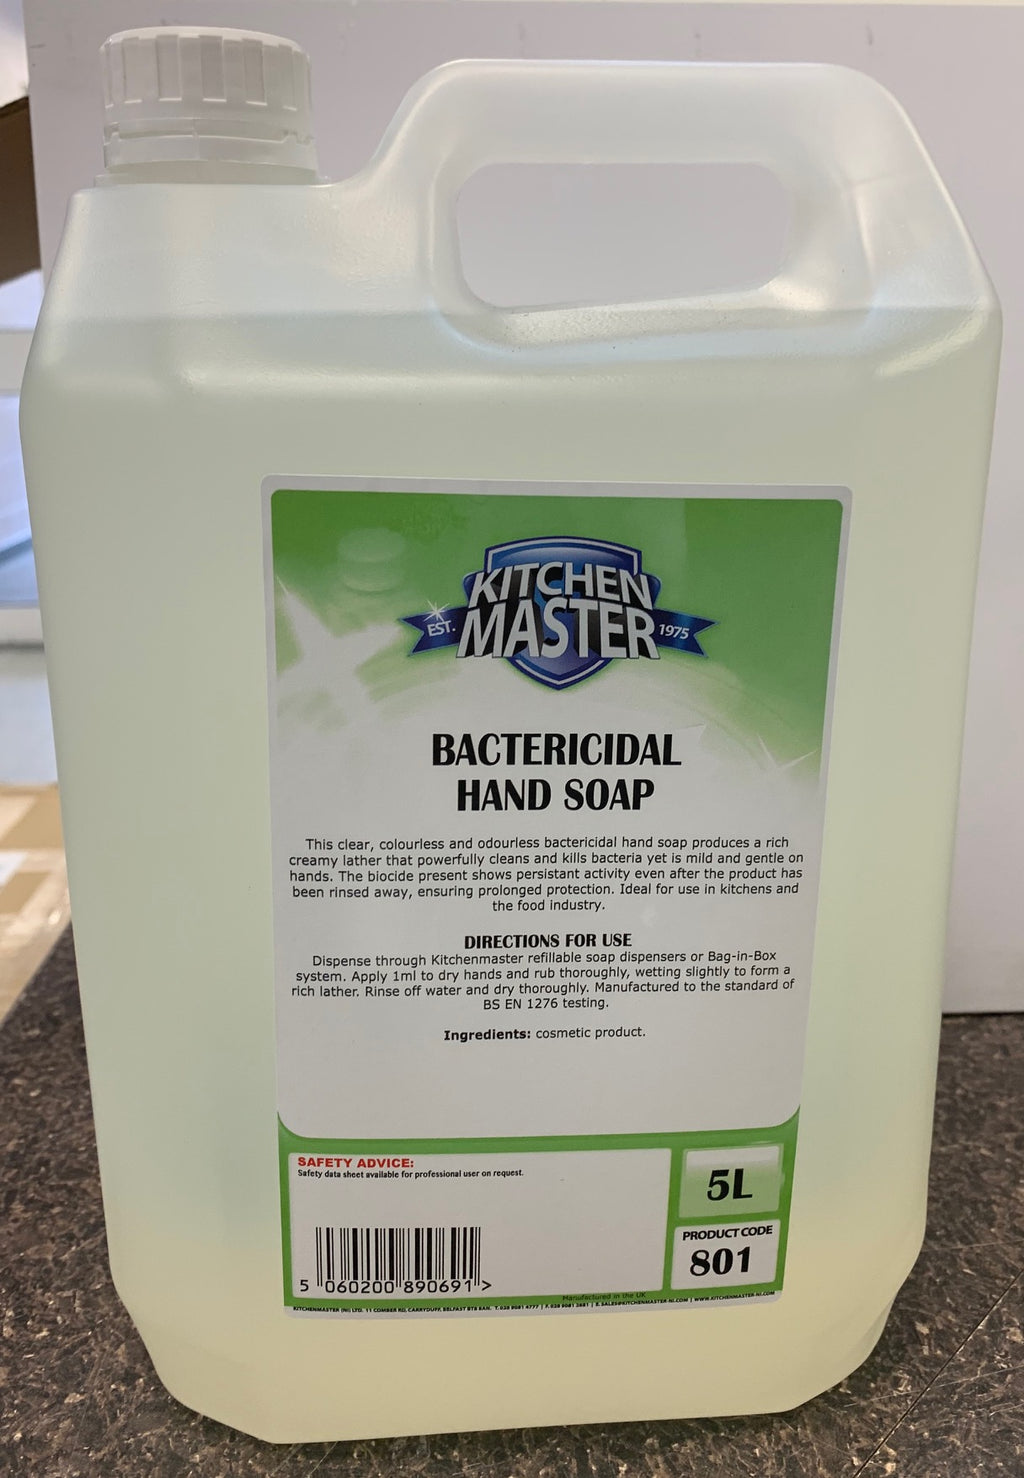 801 5LT Bactericidal hand soap